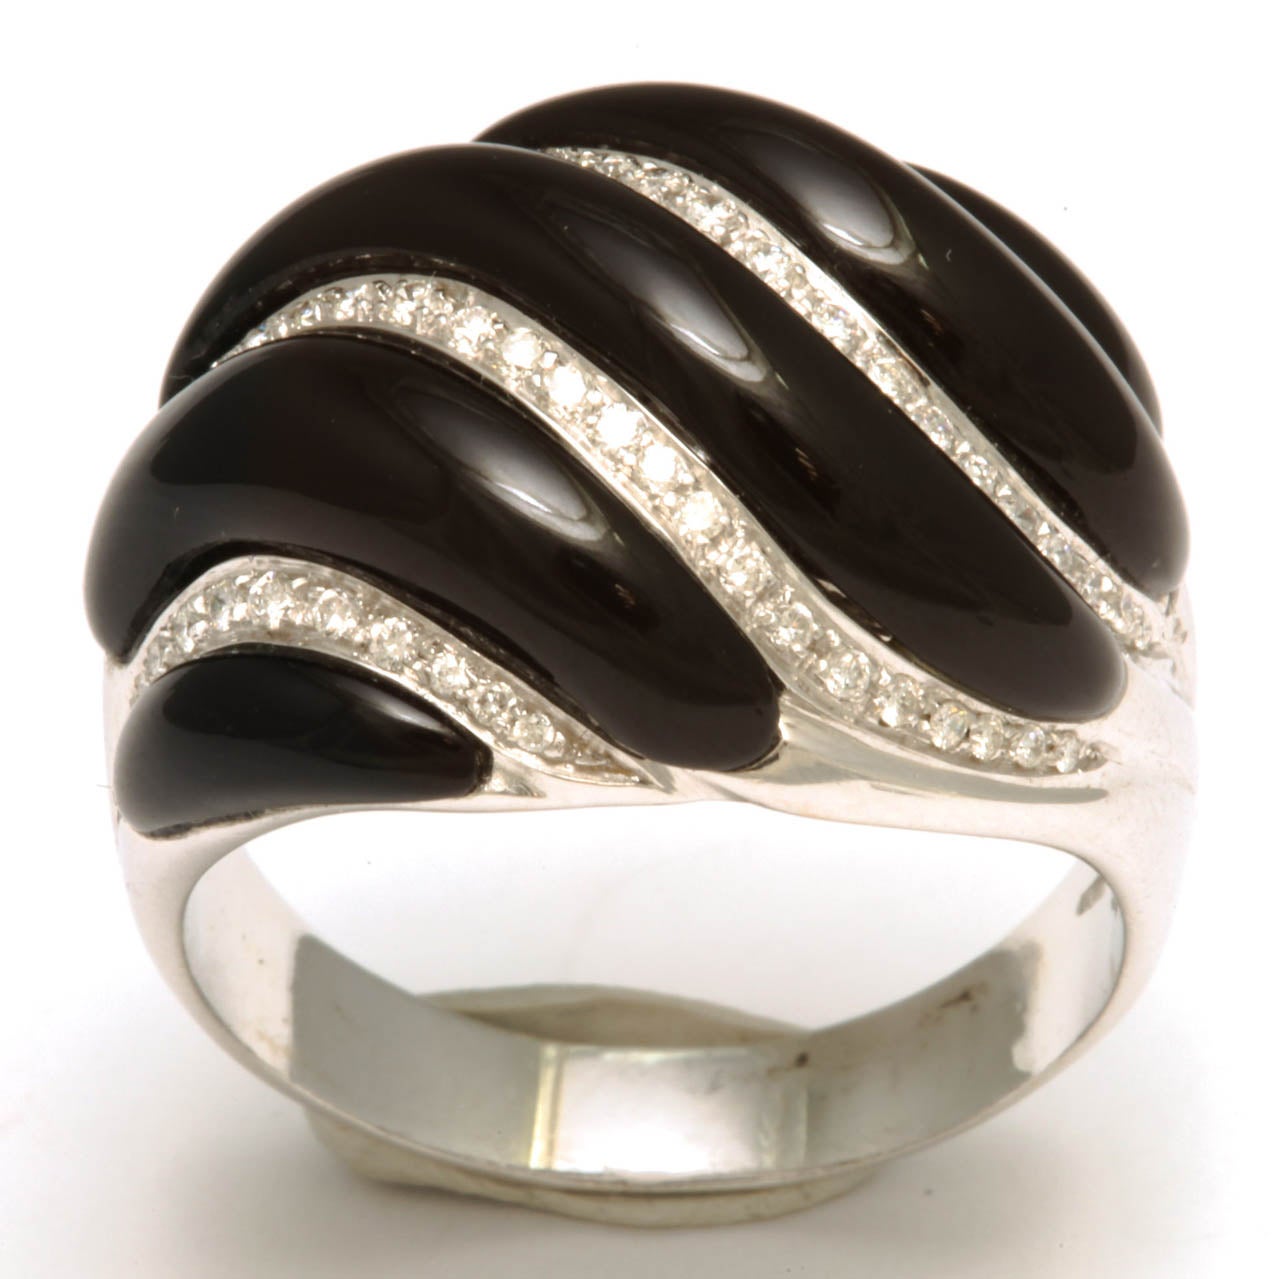 18kt White Gold Swirl ring set in Black Onyx & full cut clean & white Diamonds.  Very chic & imposing.